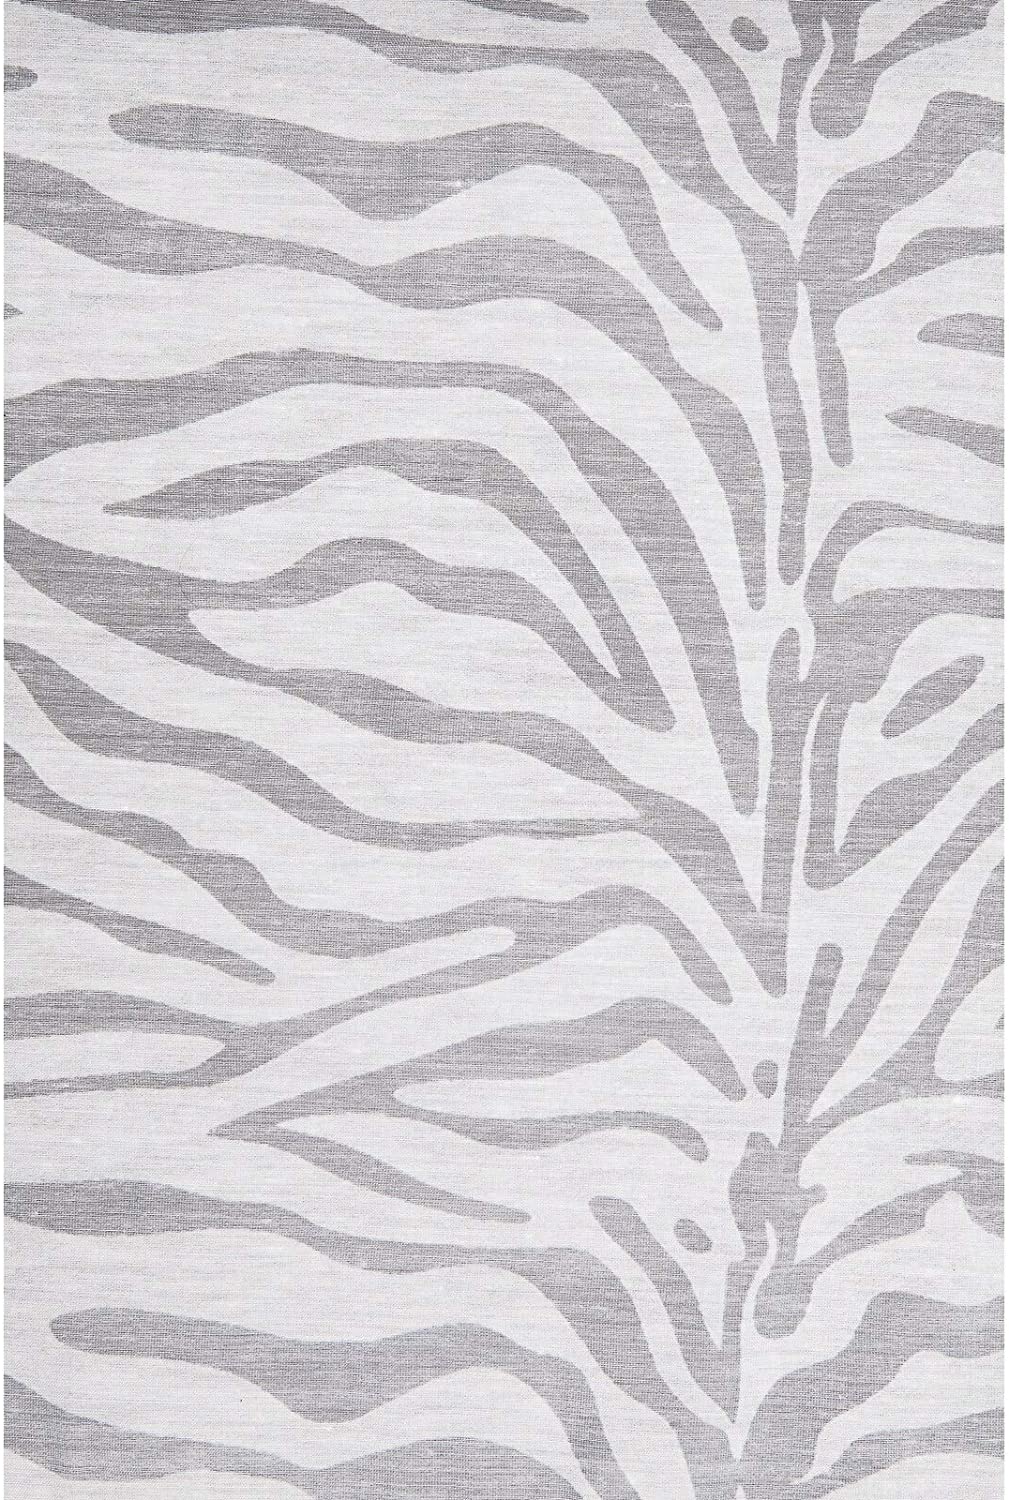 MISC Zebra White Panel 54 x 96 Geometric Polyester